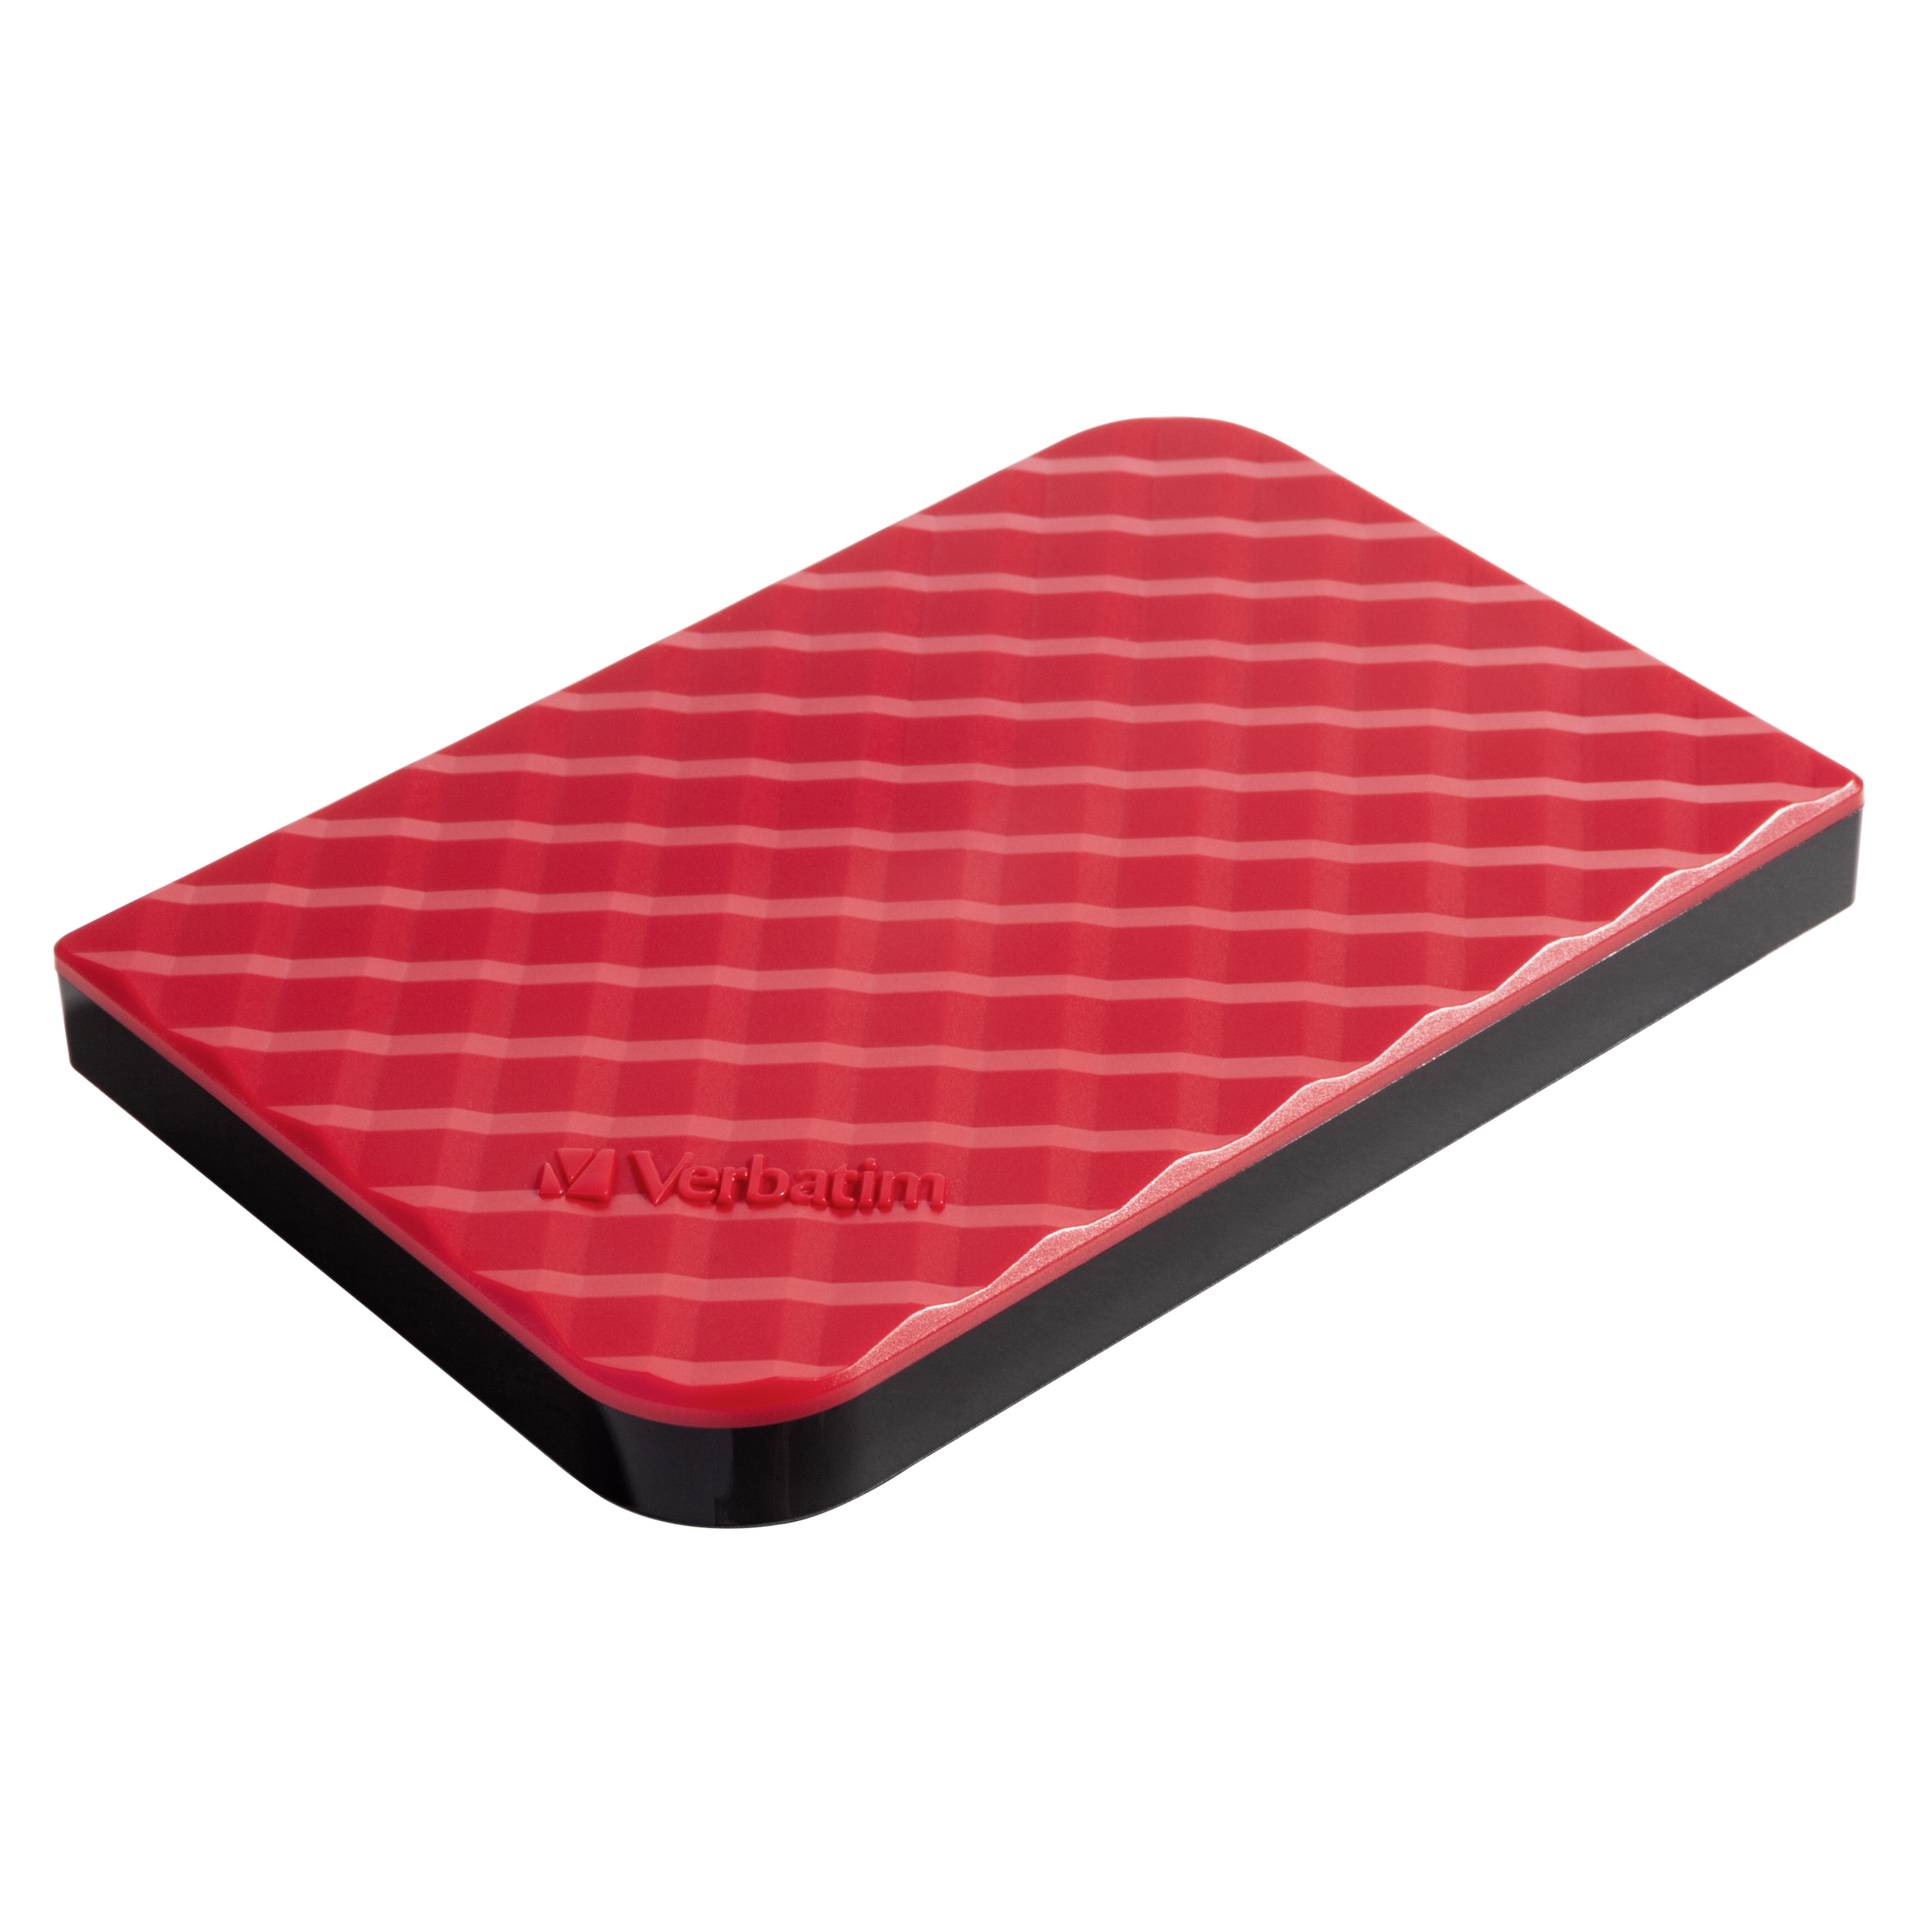 Verbatim Portables Festplattenlaufwerk Store n Go USB 3.0, 1 TB - Rot